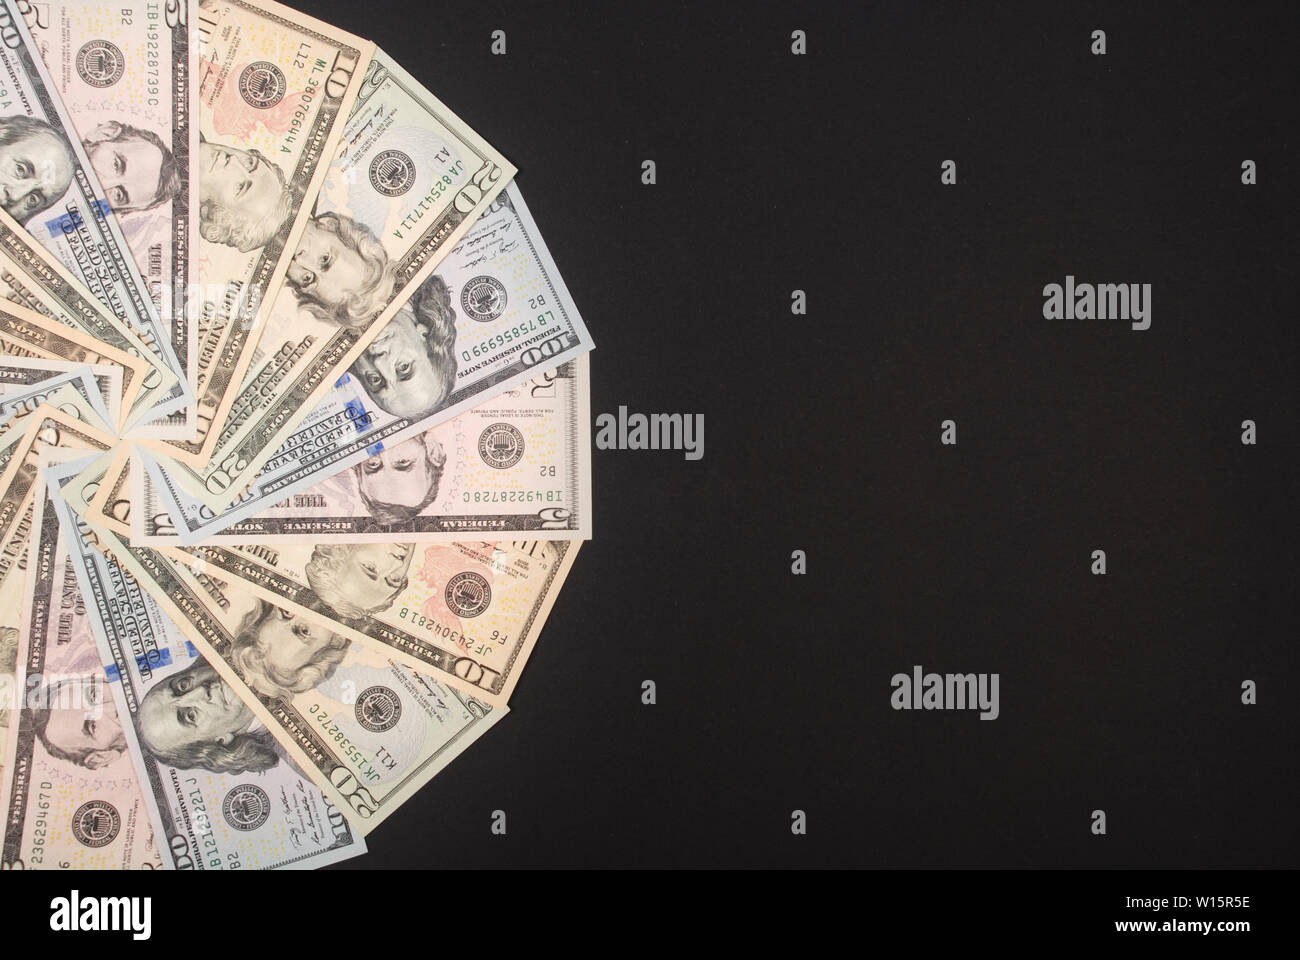 Mandala kaleidoscope from money. Abstract money background raster pattern repeat mandala circle. On black background. Stock Photo